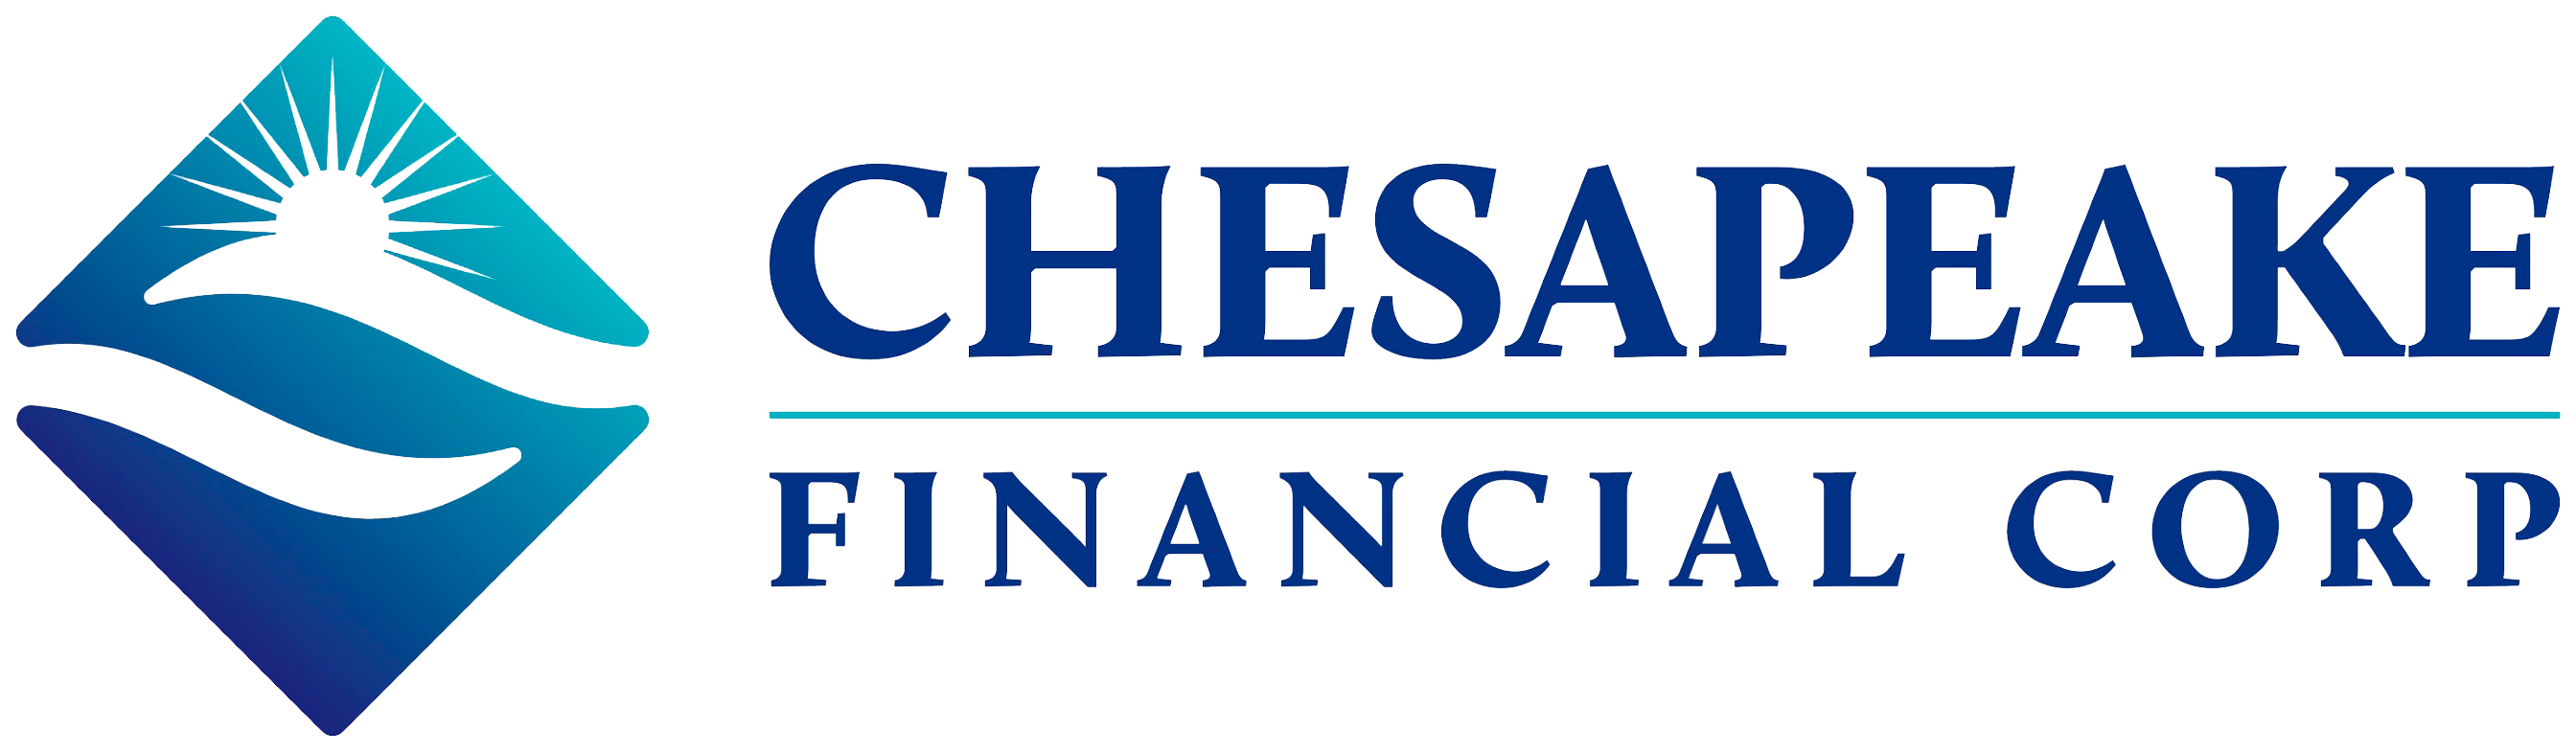 Chesapeake Financial Corp